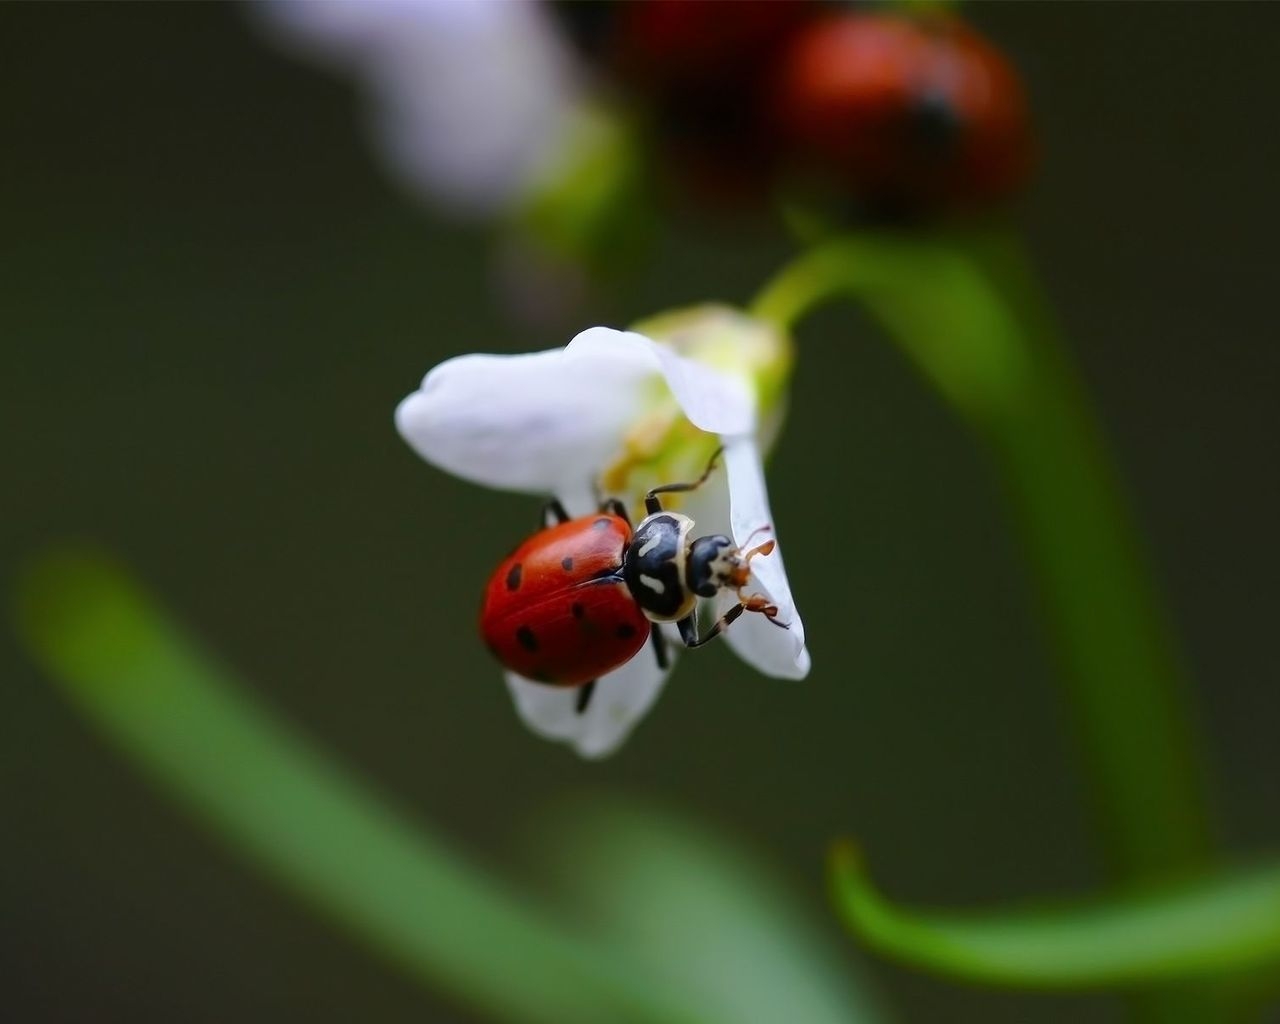 Ladybug on White Flower for 1280 x 1024 resolution